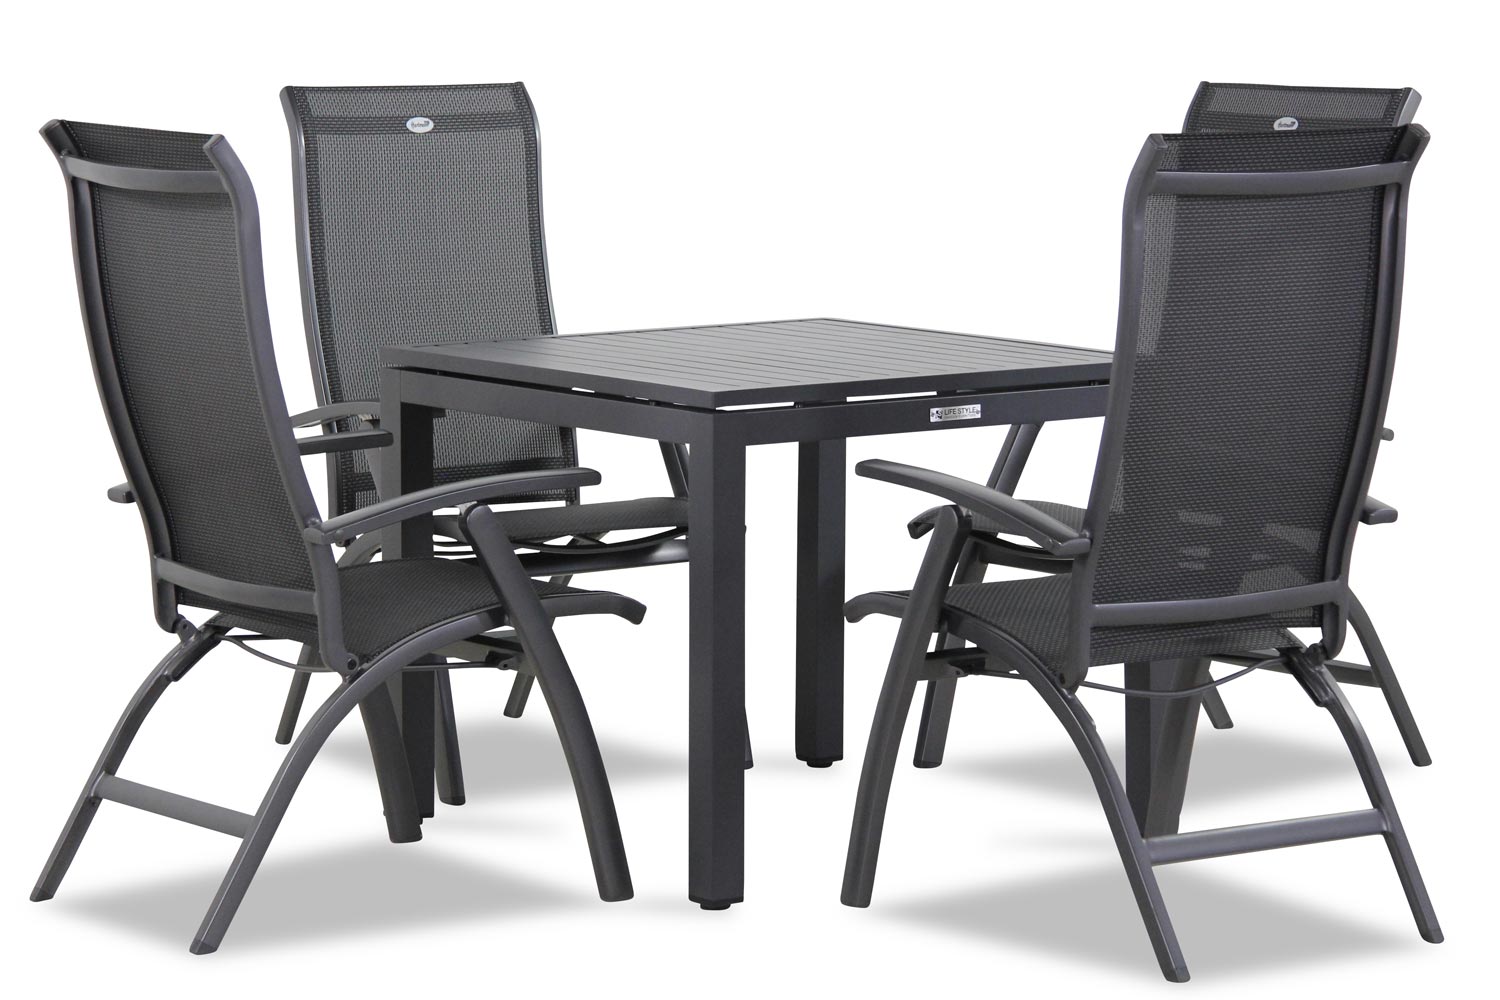 summerland stoel met concept tafel 90 cm  1 - Hartman Summerland/Concept 90 cm dining tuinset 5-delig